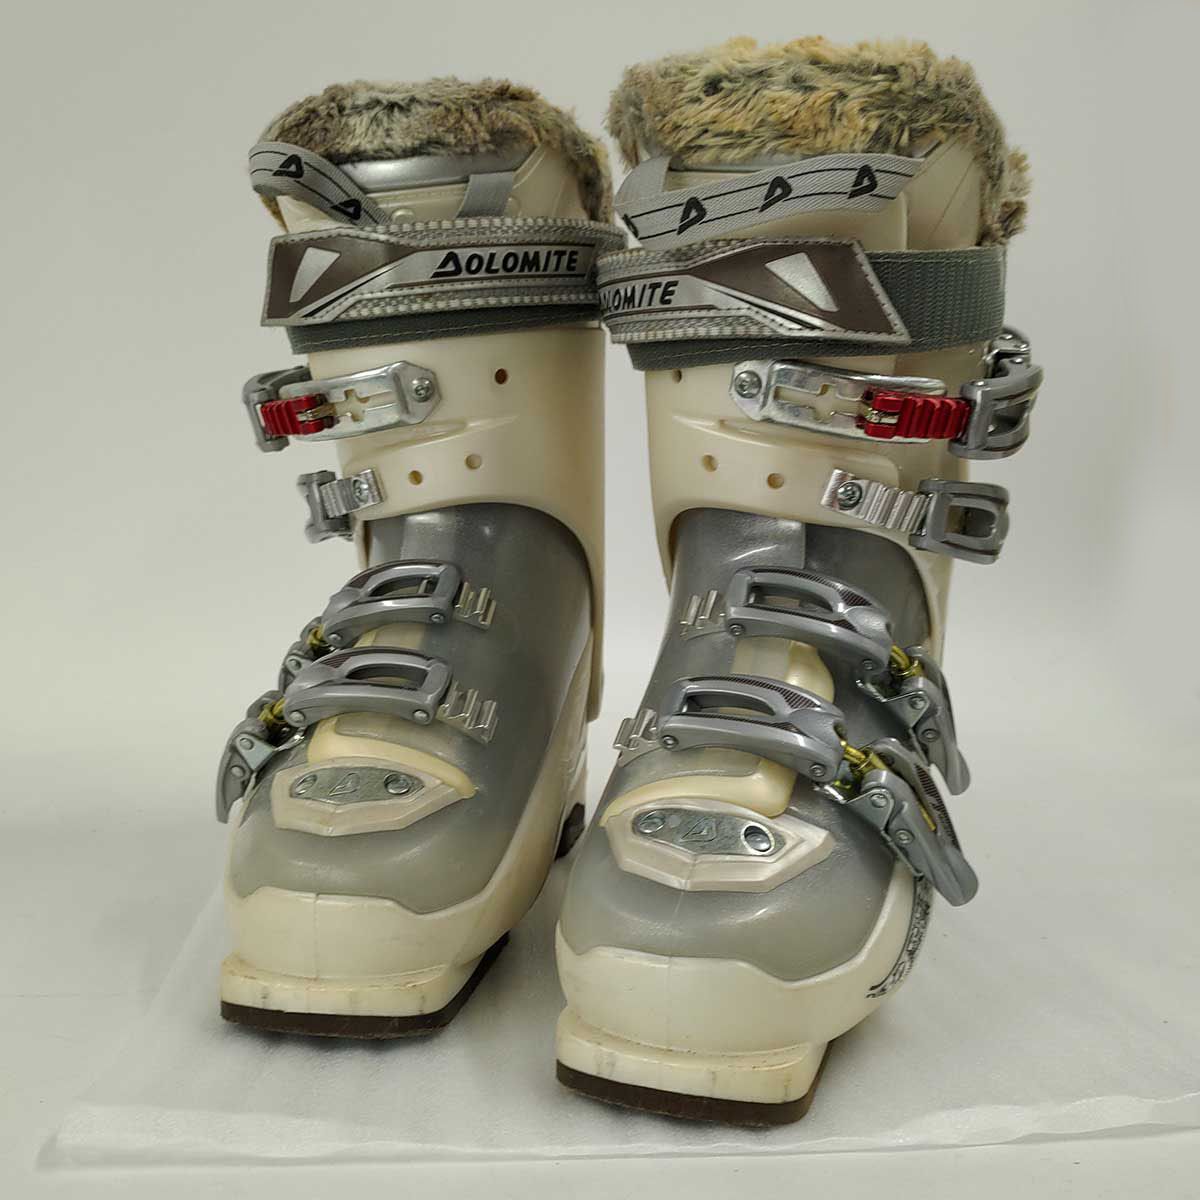 DOLOMITE ドロミテ スキーブーツ 25.0 - 25.5cm - ブーツ(女性用)